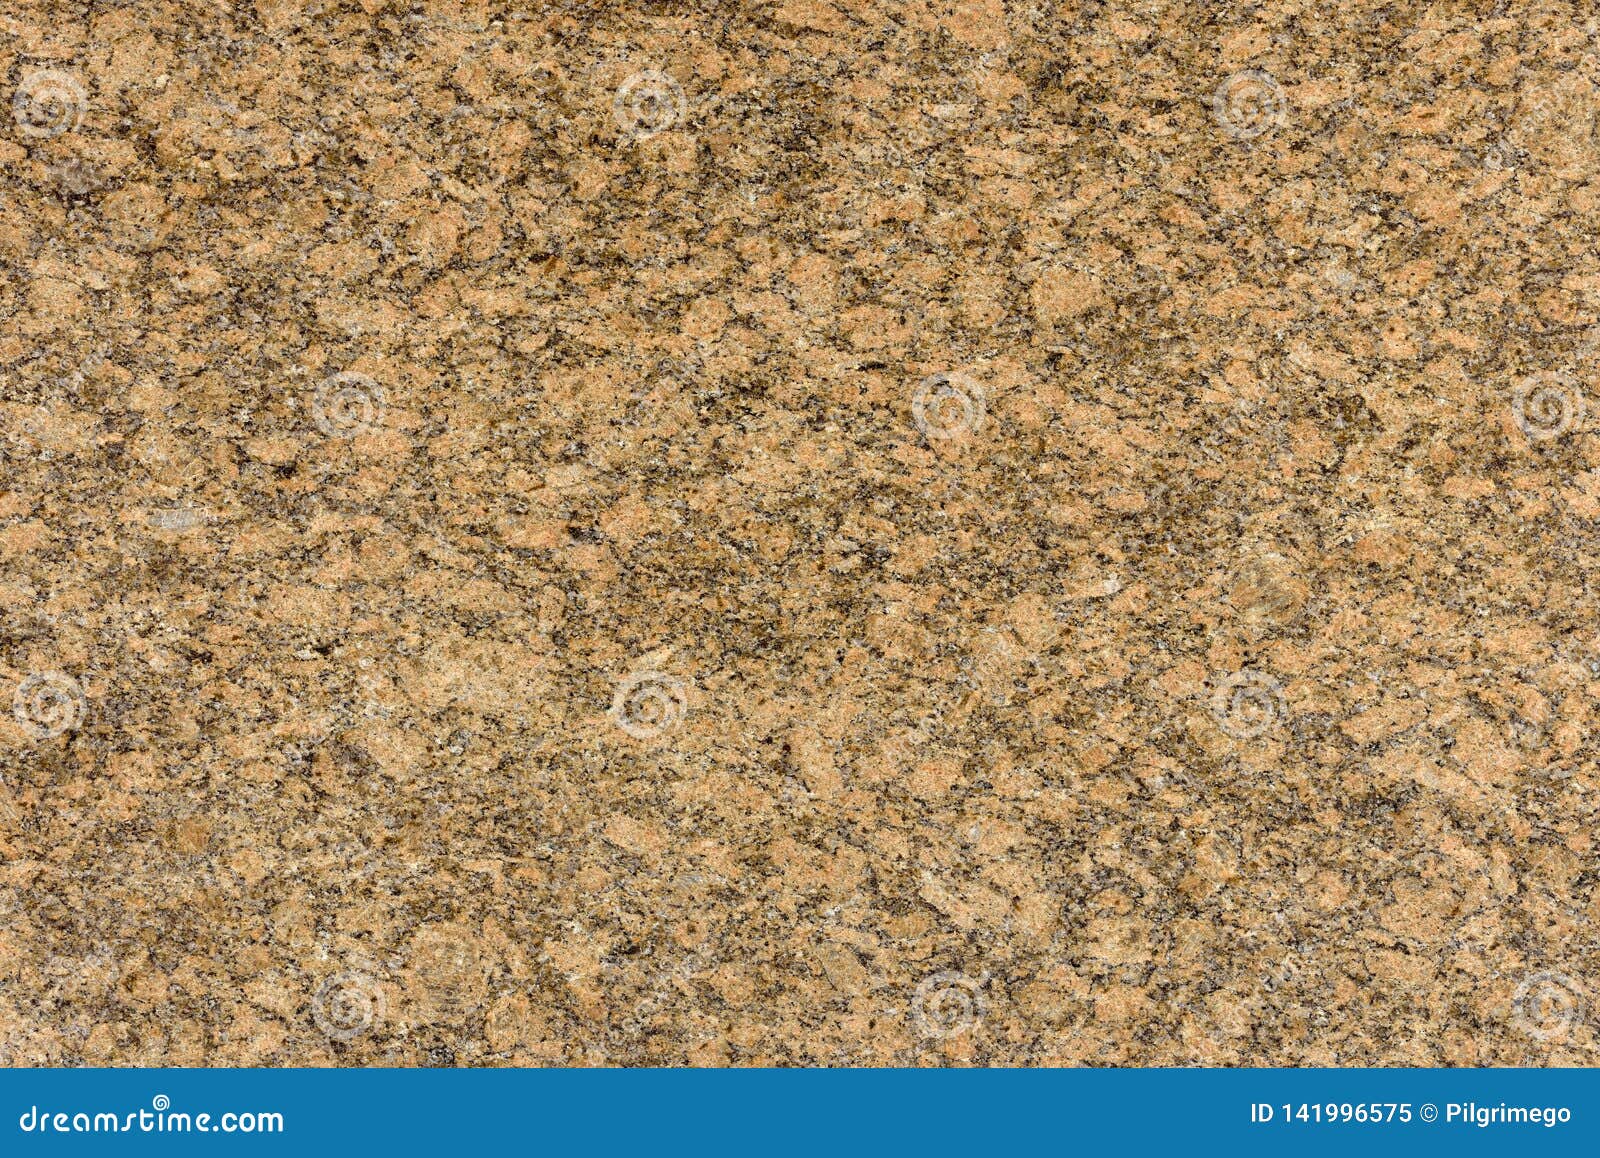 real natural `granite giallo veneziano ` texture pattern.